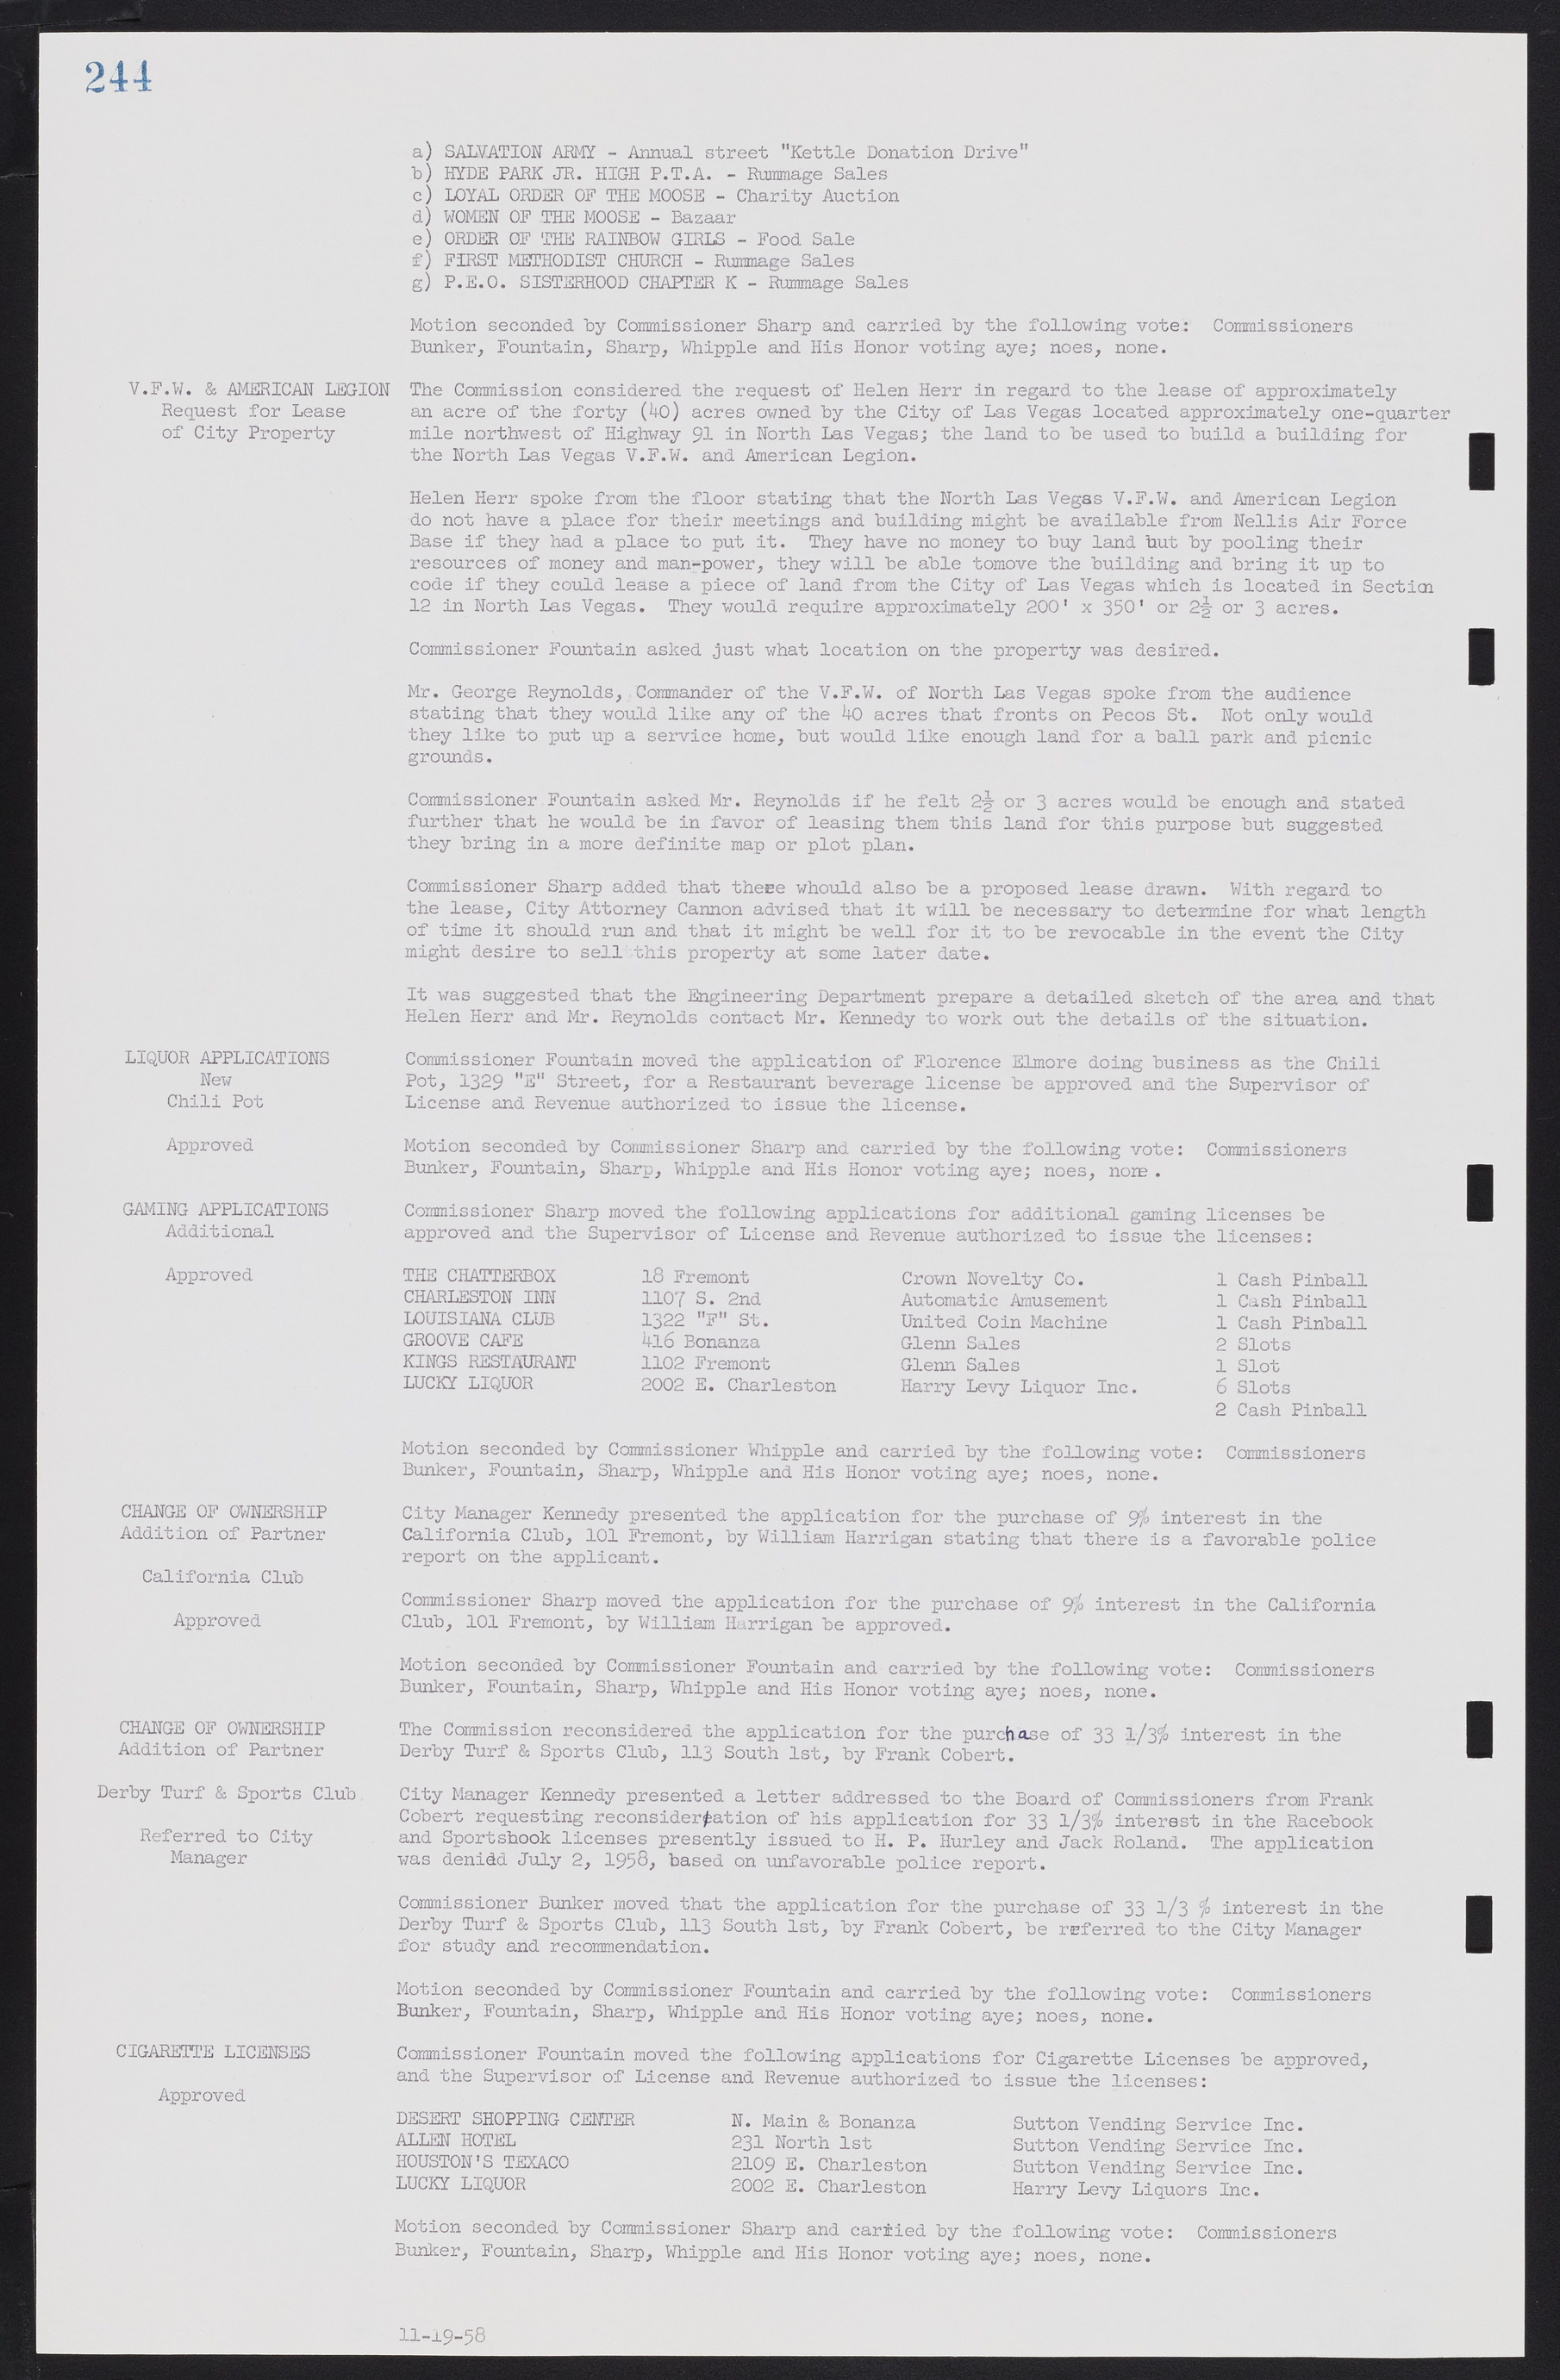 Las Vegas City Commission Minutes, November 20, 1957 to December 2, 1959, lvc000011-252